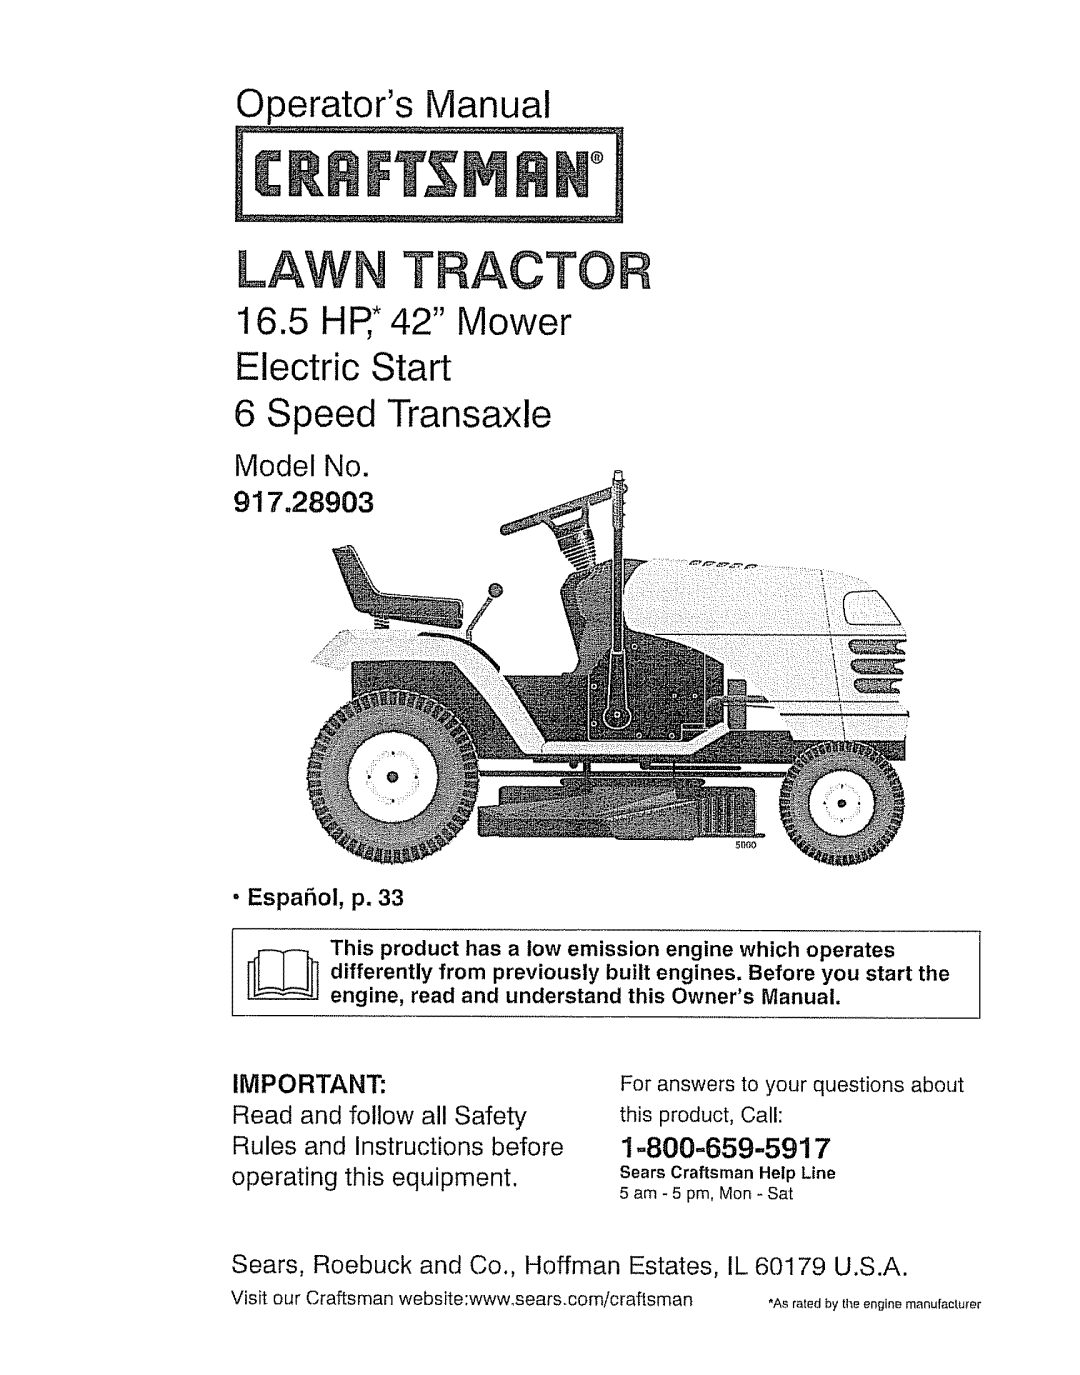 Craftsman 917.28903 owner manual Lawn Tracto, Operators Manual, 16.5HR* 42 Mower Electric Start, Model No, 1=800=659-5917 